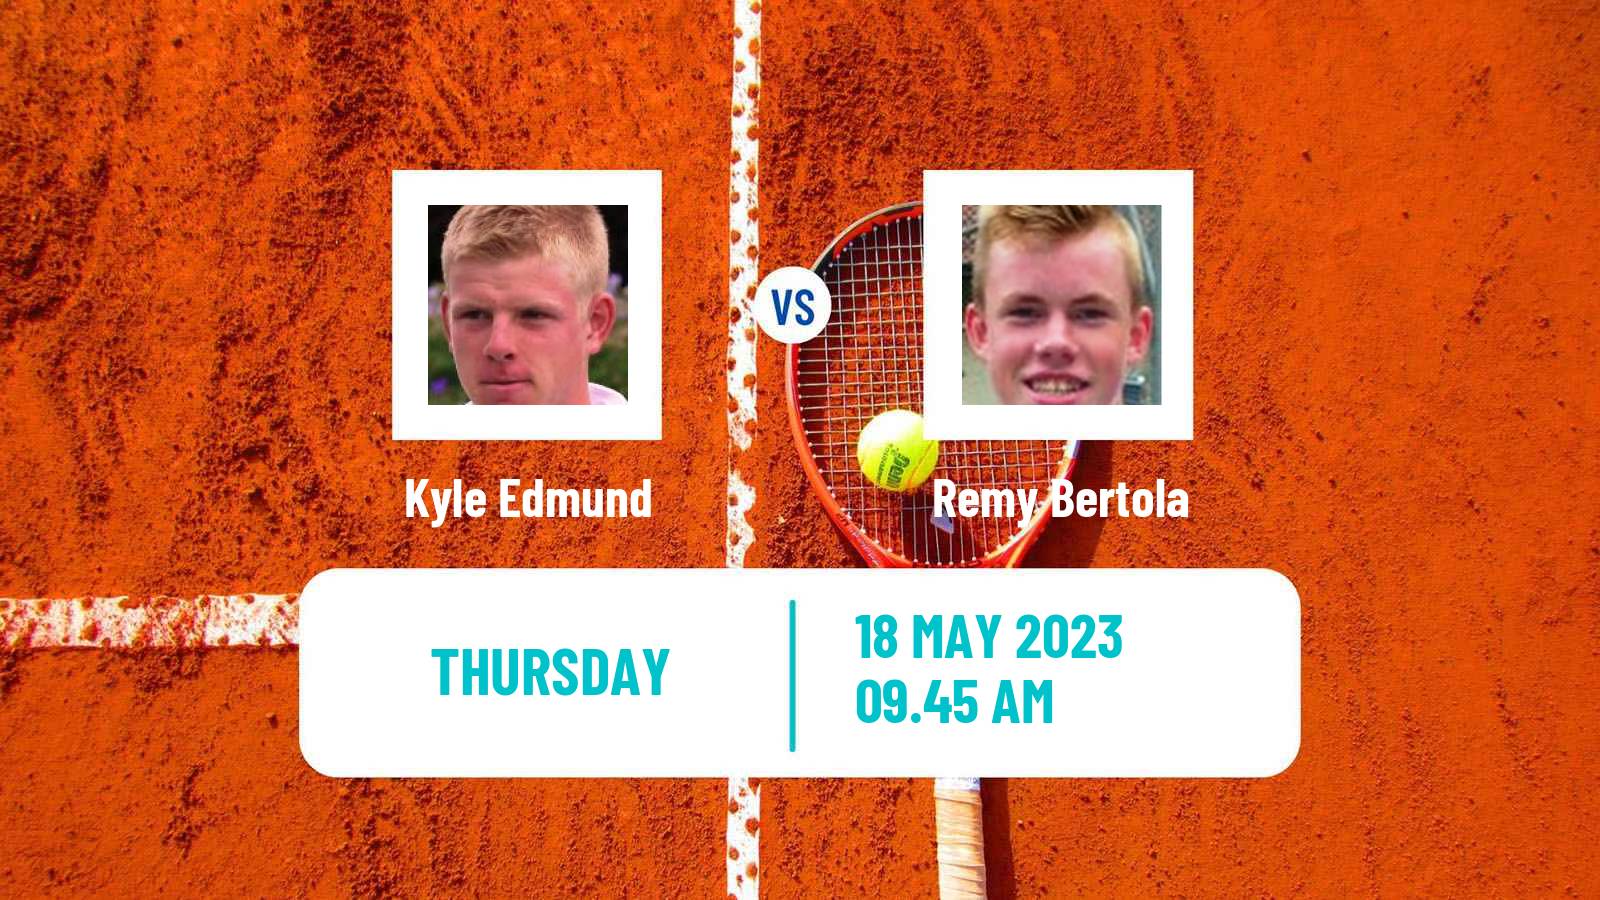 Tennis ITF M25 Reggio Emilia Men Kyle Edmund - Remy Bertola